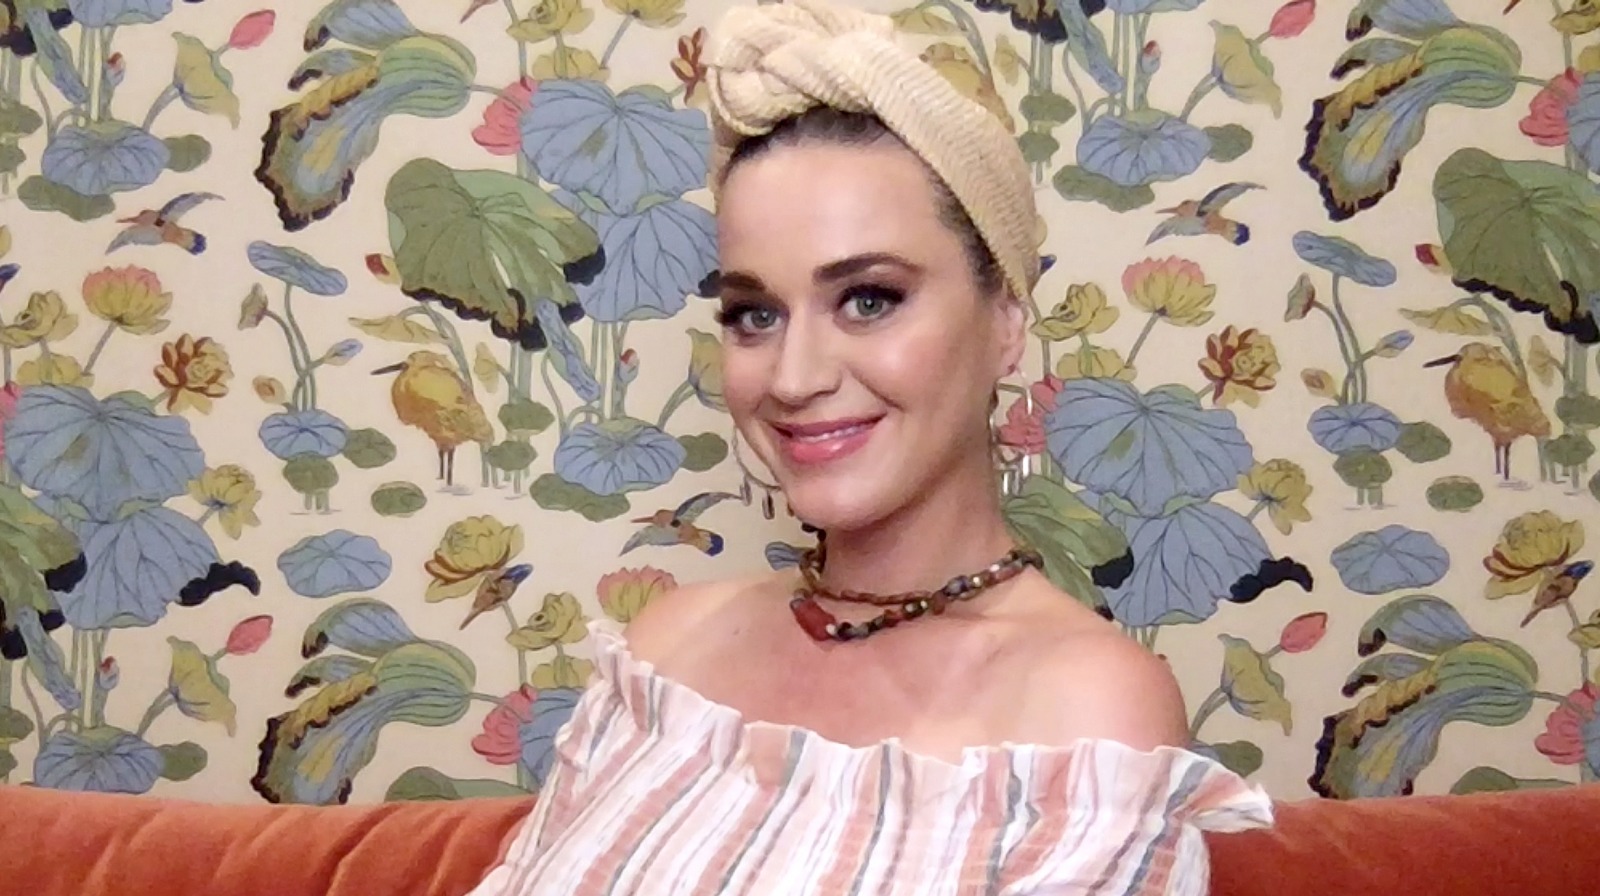 Katy Perry Shows Postpartum Body in Bra and Undies Selfie Days